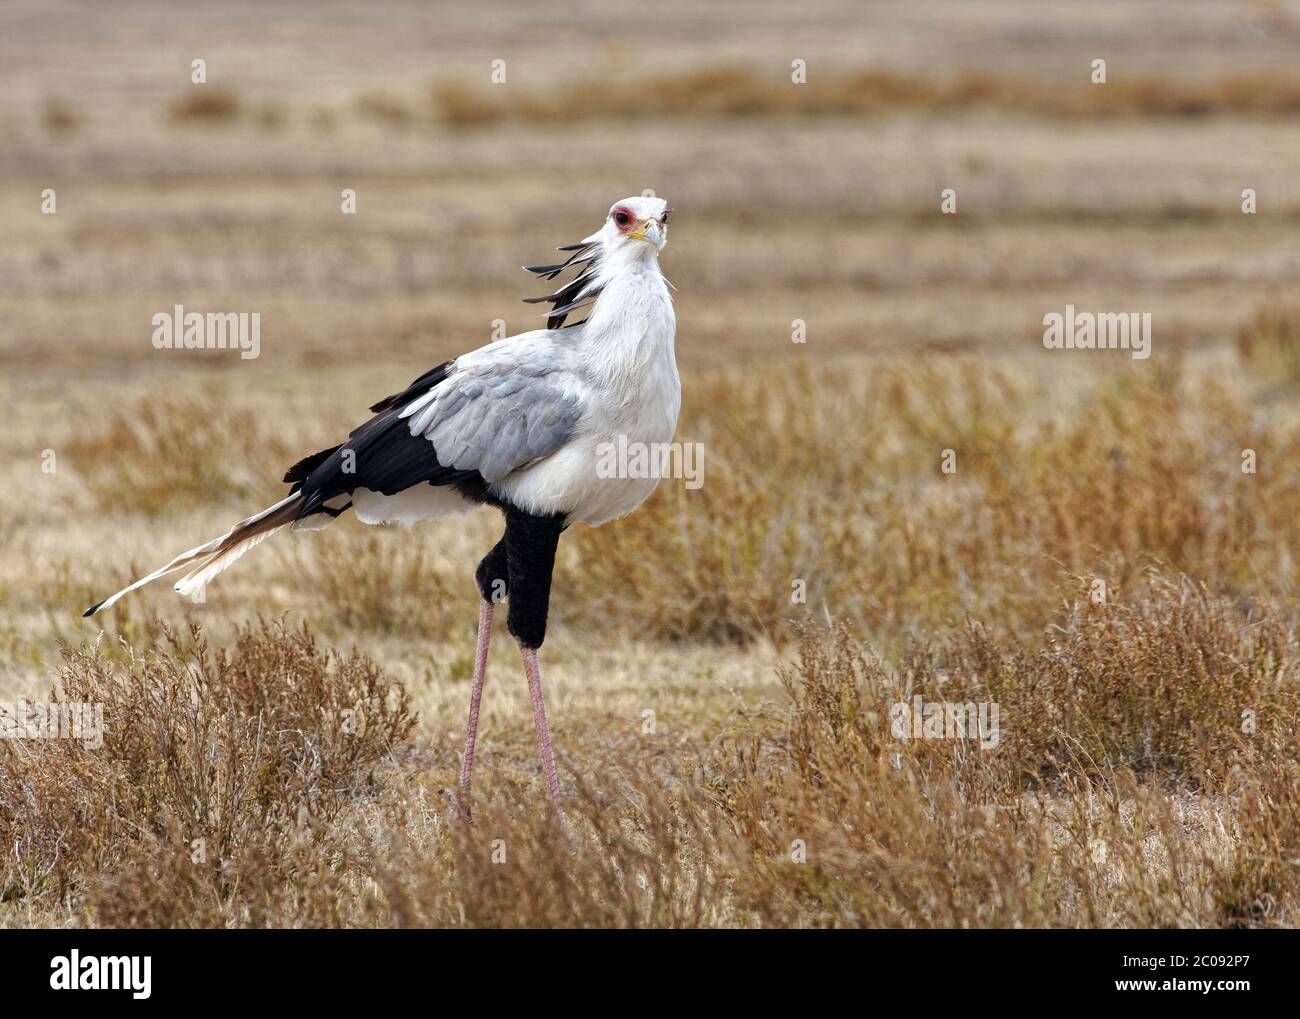 Secretary bird walking, large bird of prey, Sagittarius serpentarius, long legs, 4 feet tall, black, white, grey, small plume, hooked bill, long tail Stock Photo